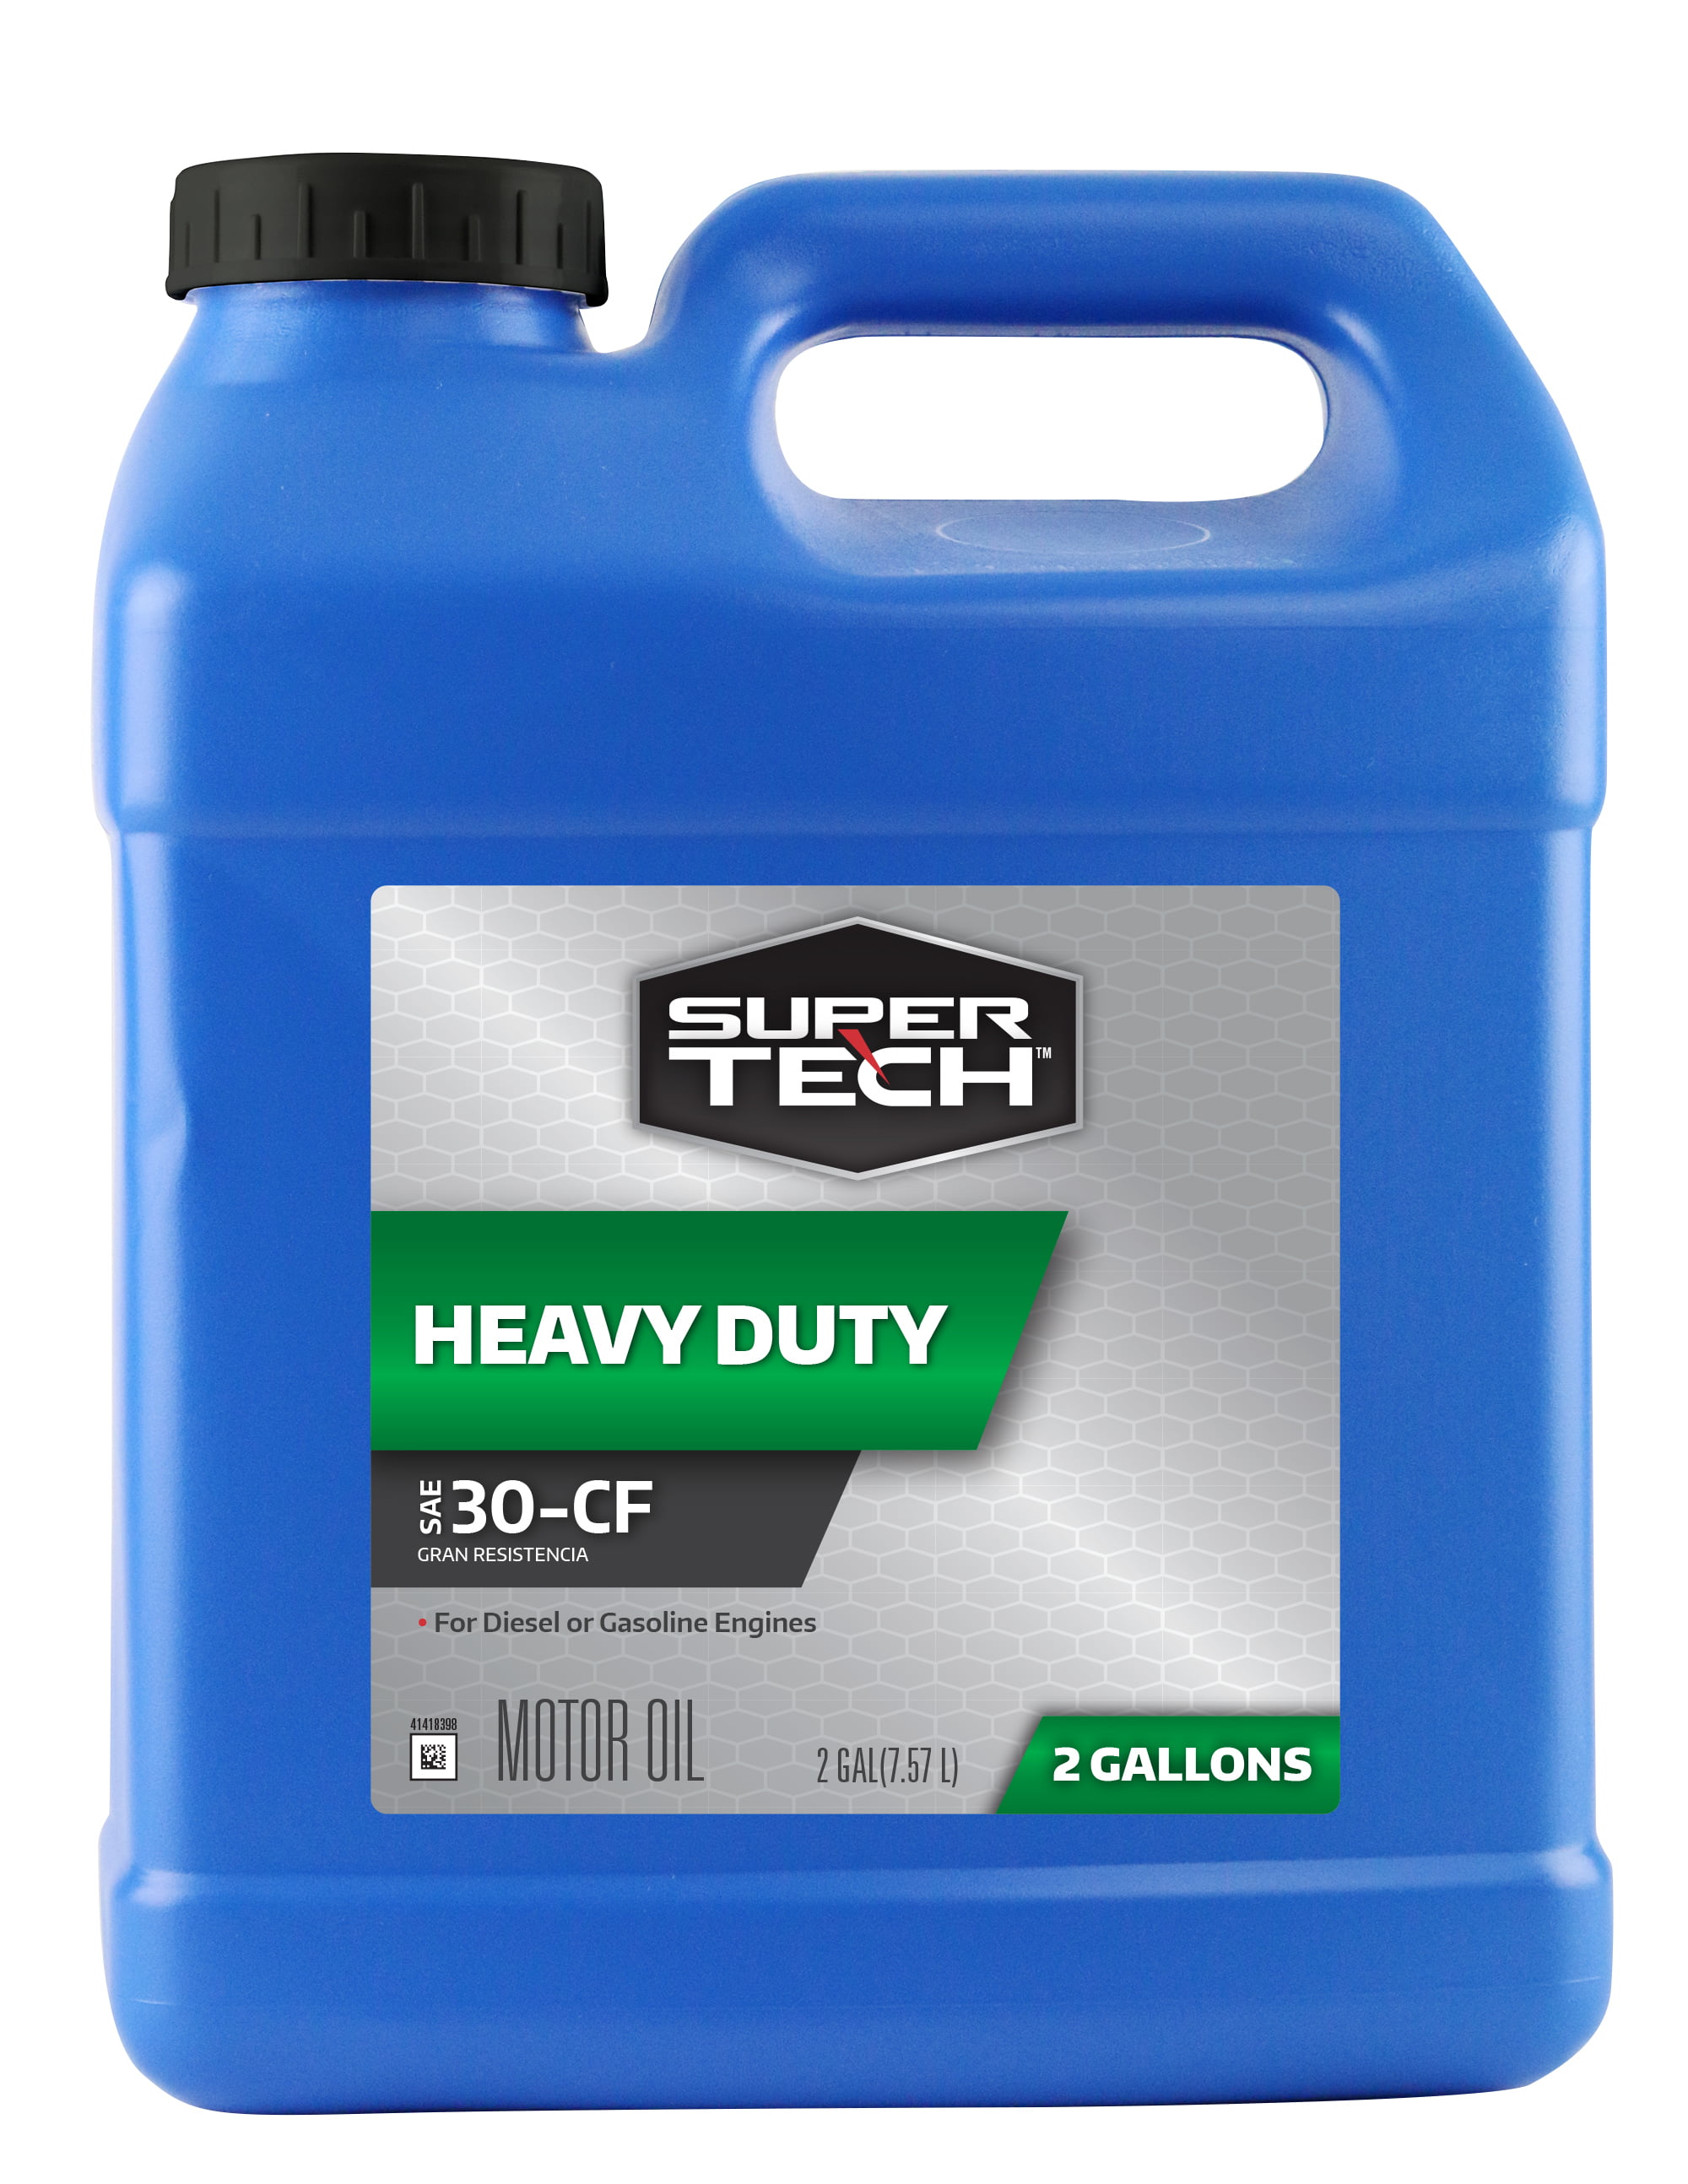 Super Tech Heavy Duty Sae 30 Motor Oil 2 Gallons